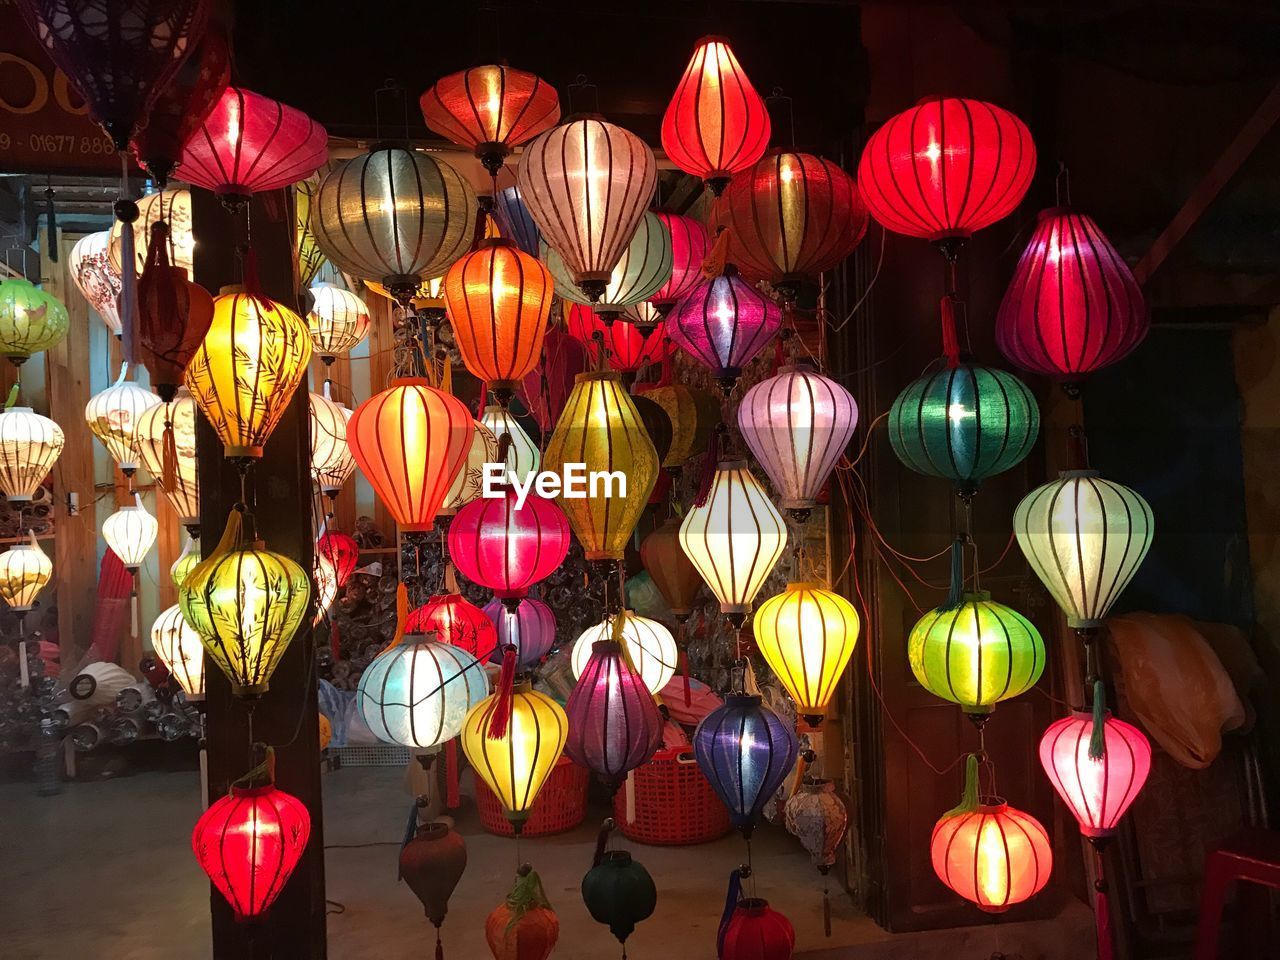 Illuminated lanterns hanging at night for sale